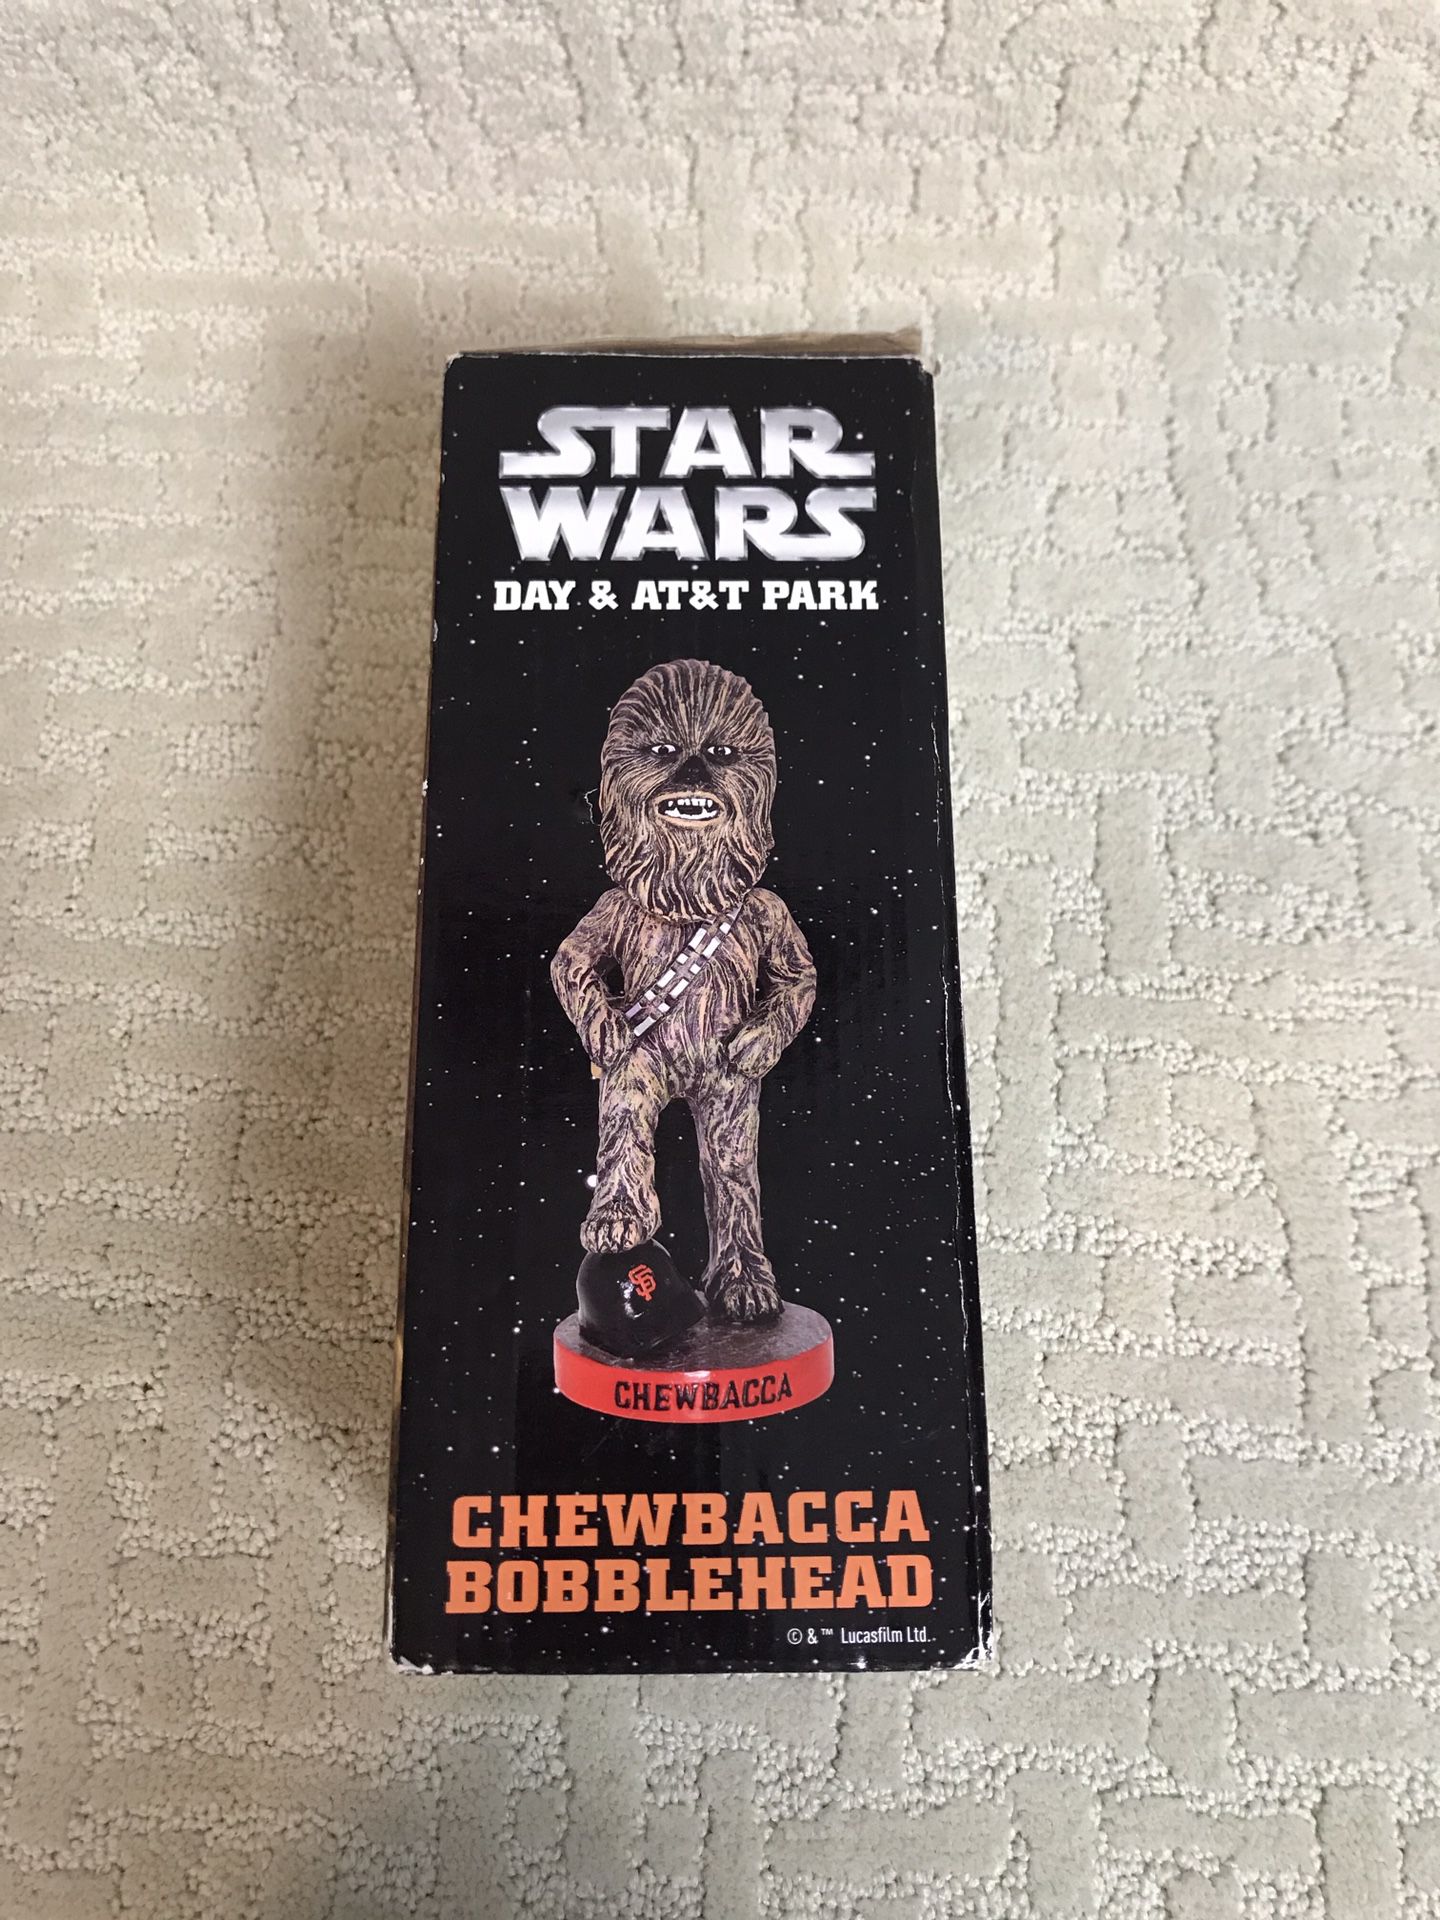 SF GIANTS 2015 Star Wars Chewbacca SGA bobblehead bobble New in box